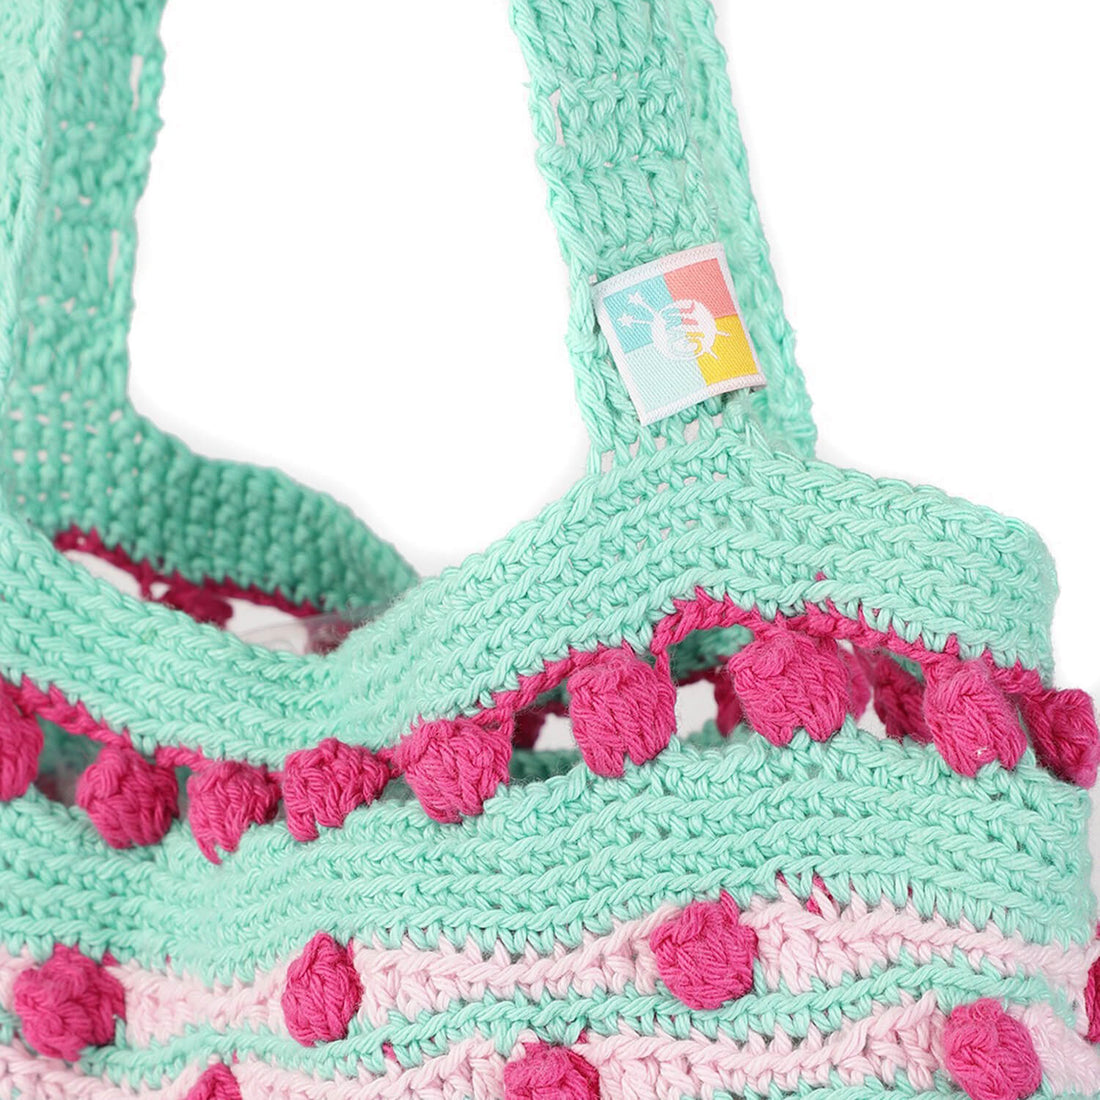 Handmade Crochet Market Bag - Multi-Color 2805